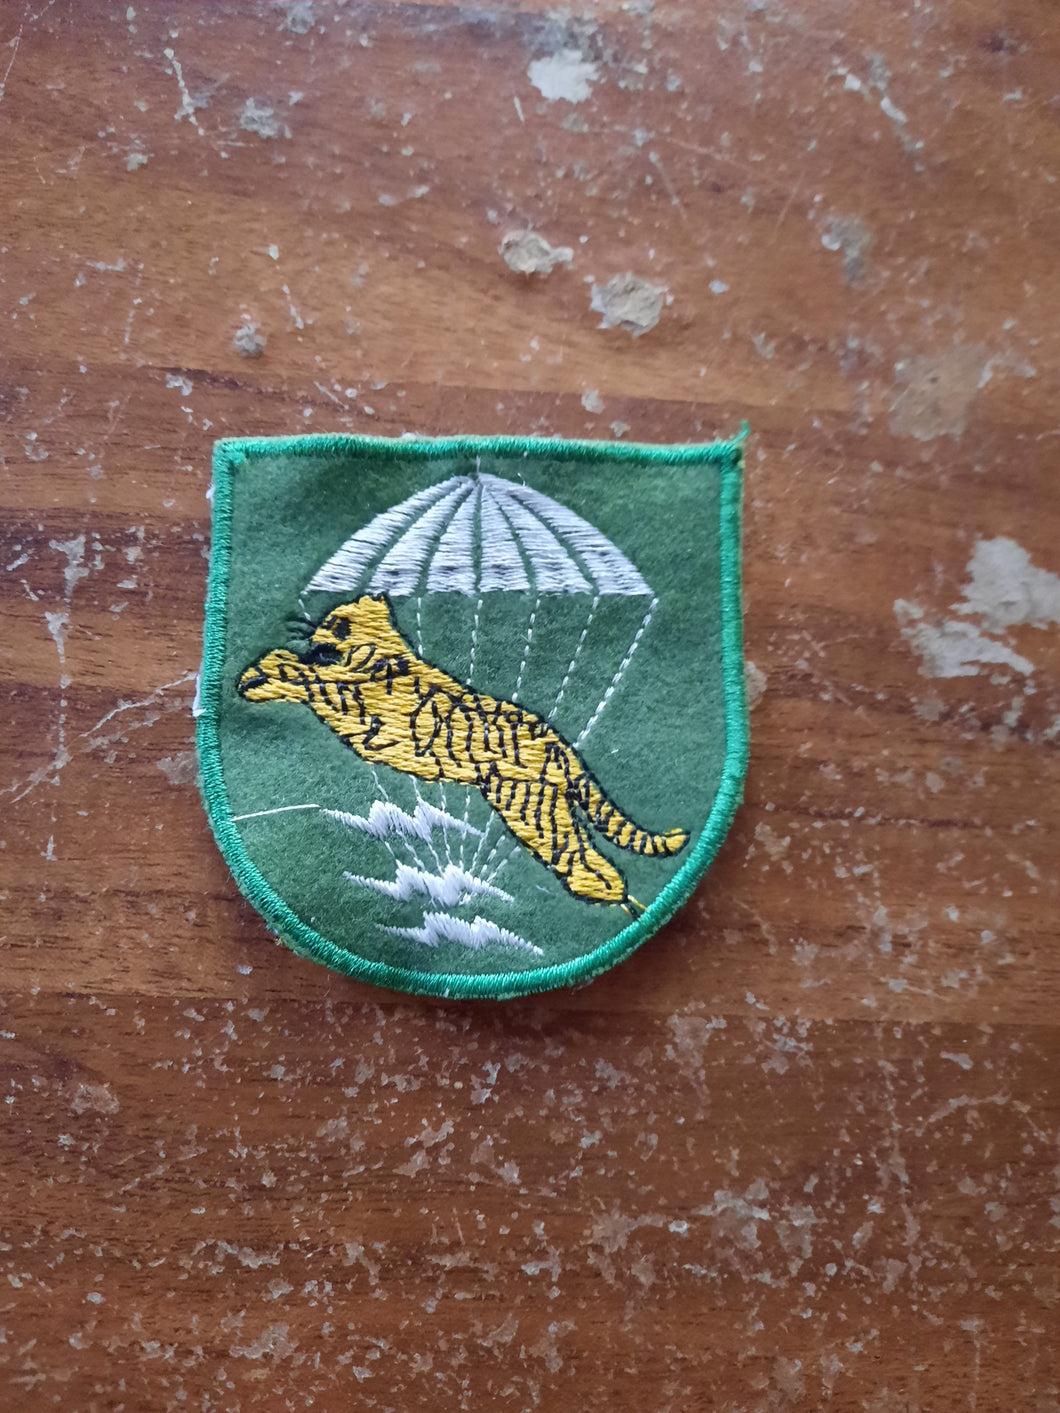 Vietnam war ARVN Special forces LLDB shoulder patch